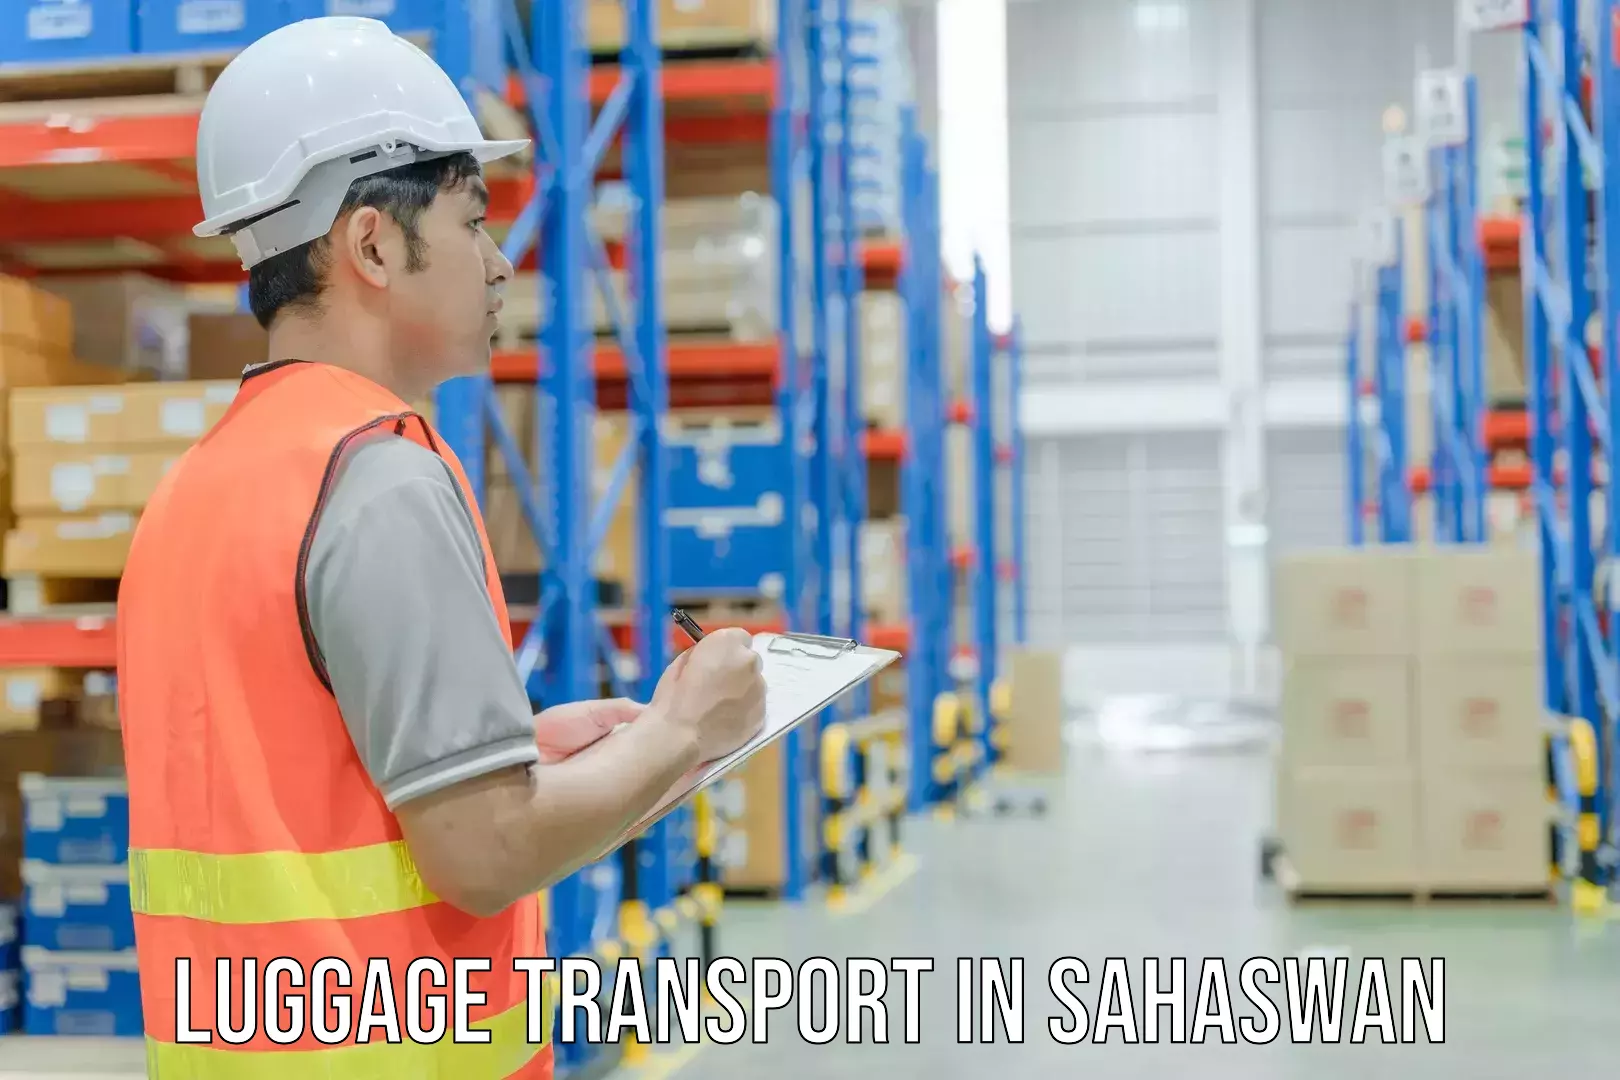 Heavy luggage shipping in Sahaswan